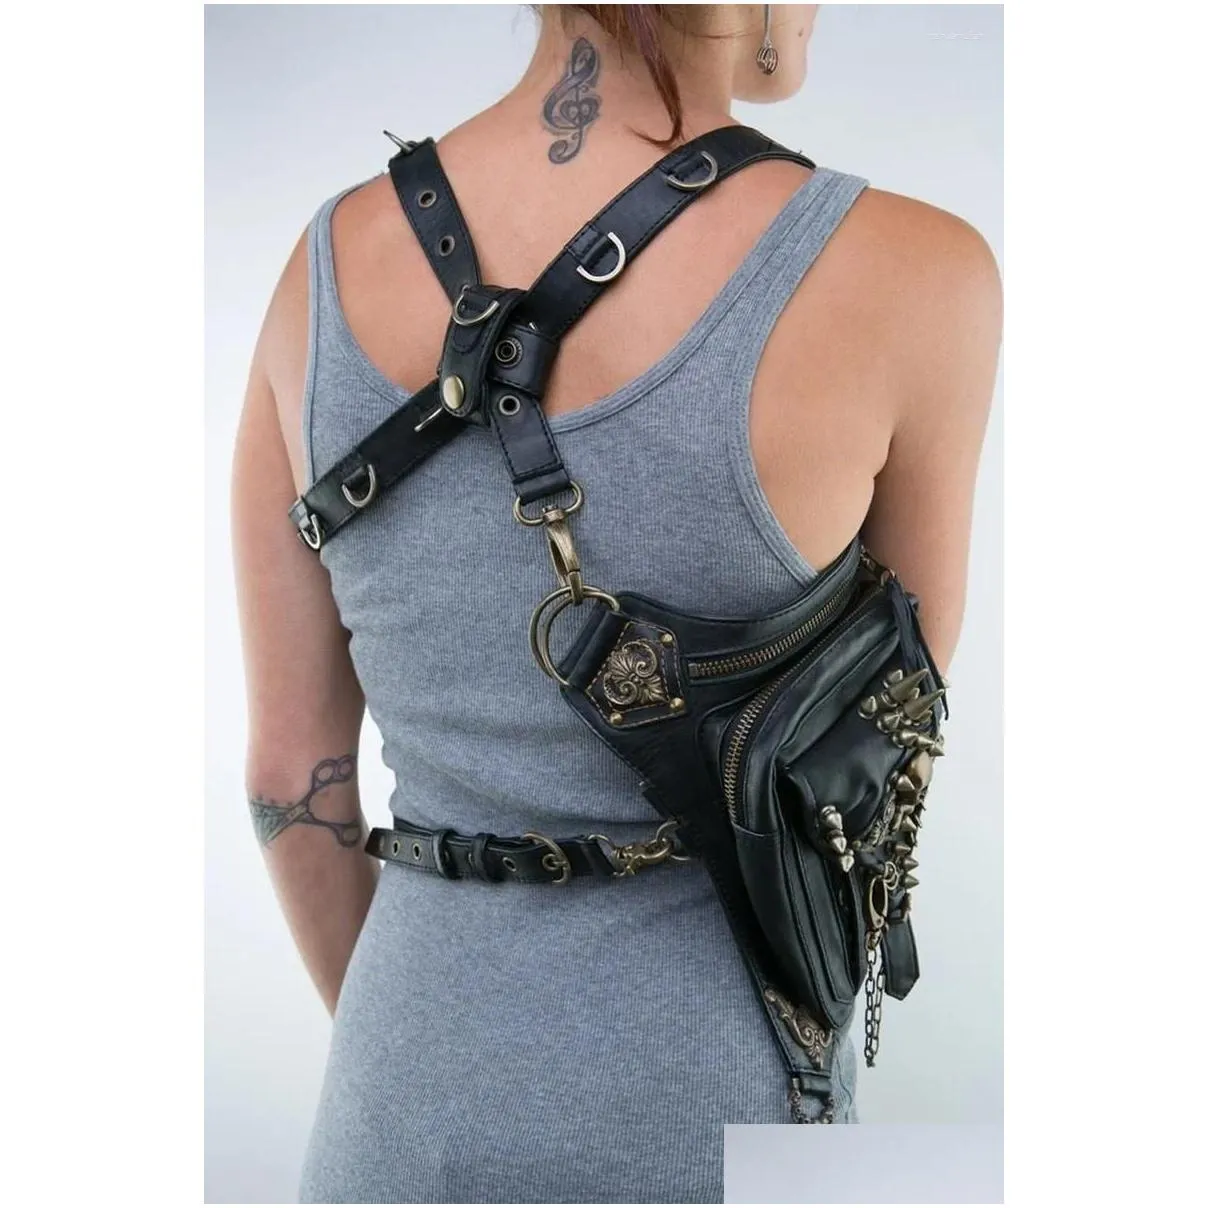 waist bags norbinus leather rivet women drop leg bag steampunk retro rock belt men motorcycle crossbody shoulder phone pouch